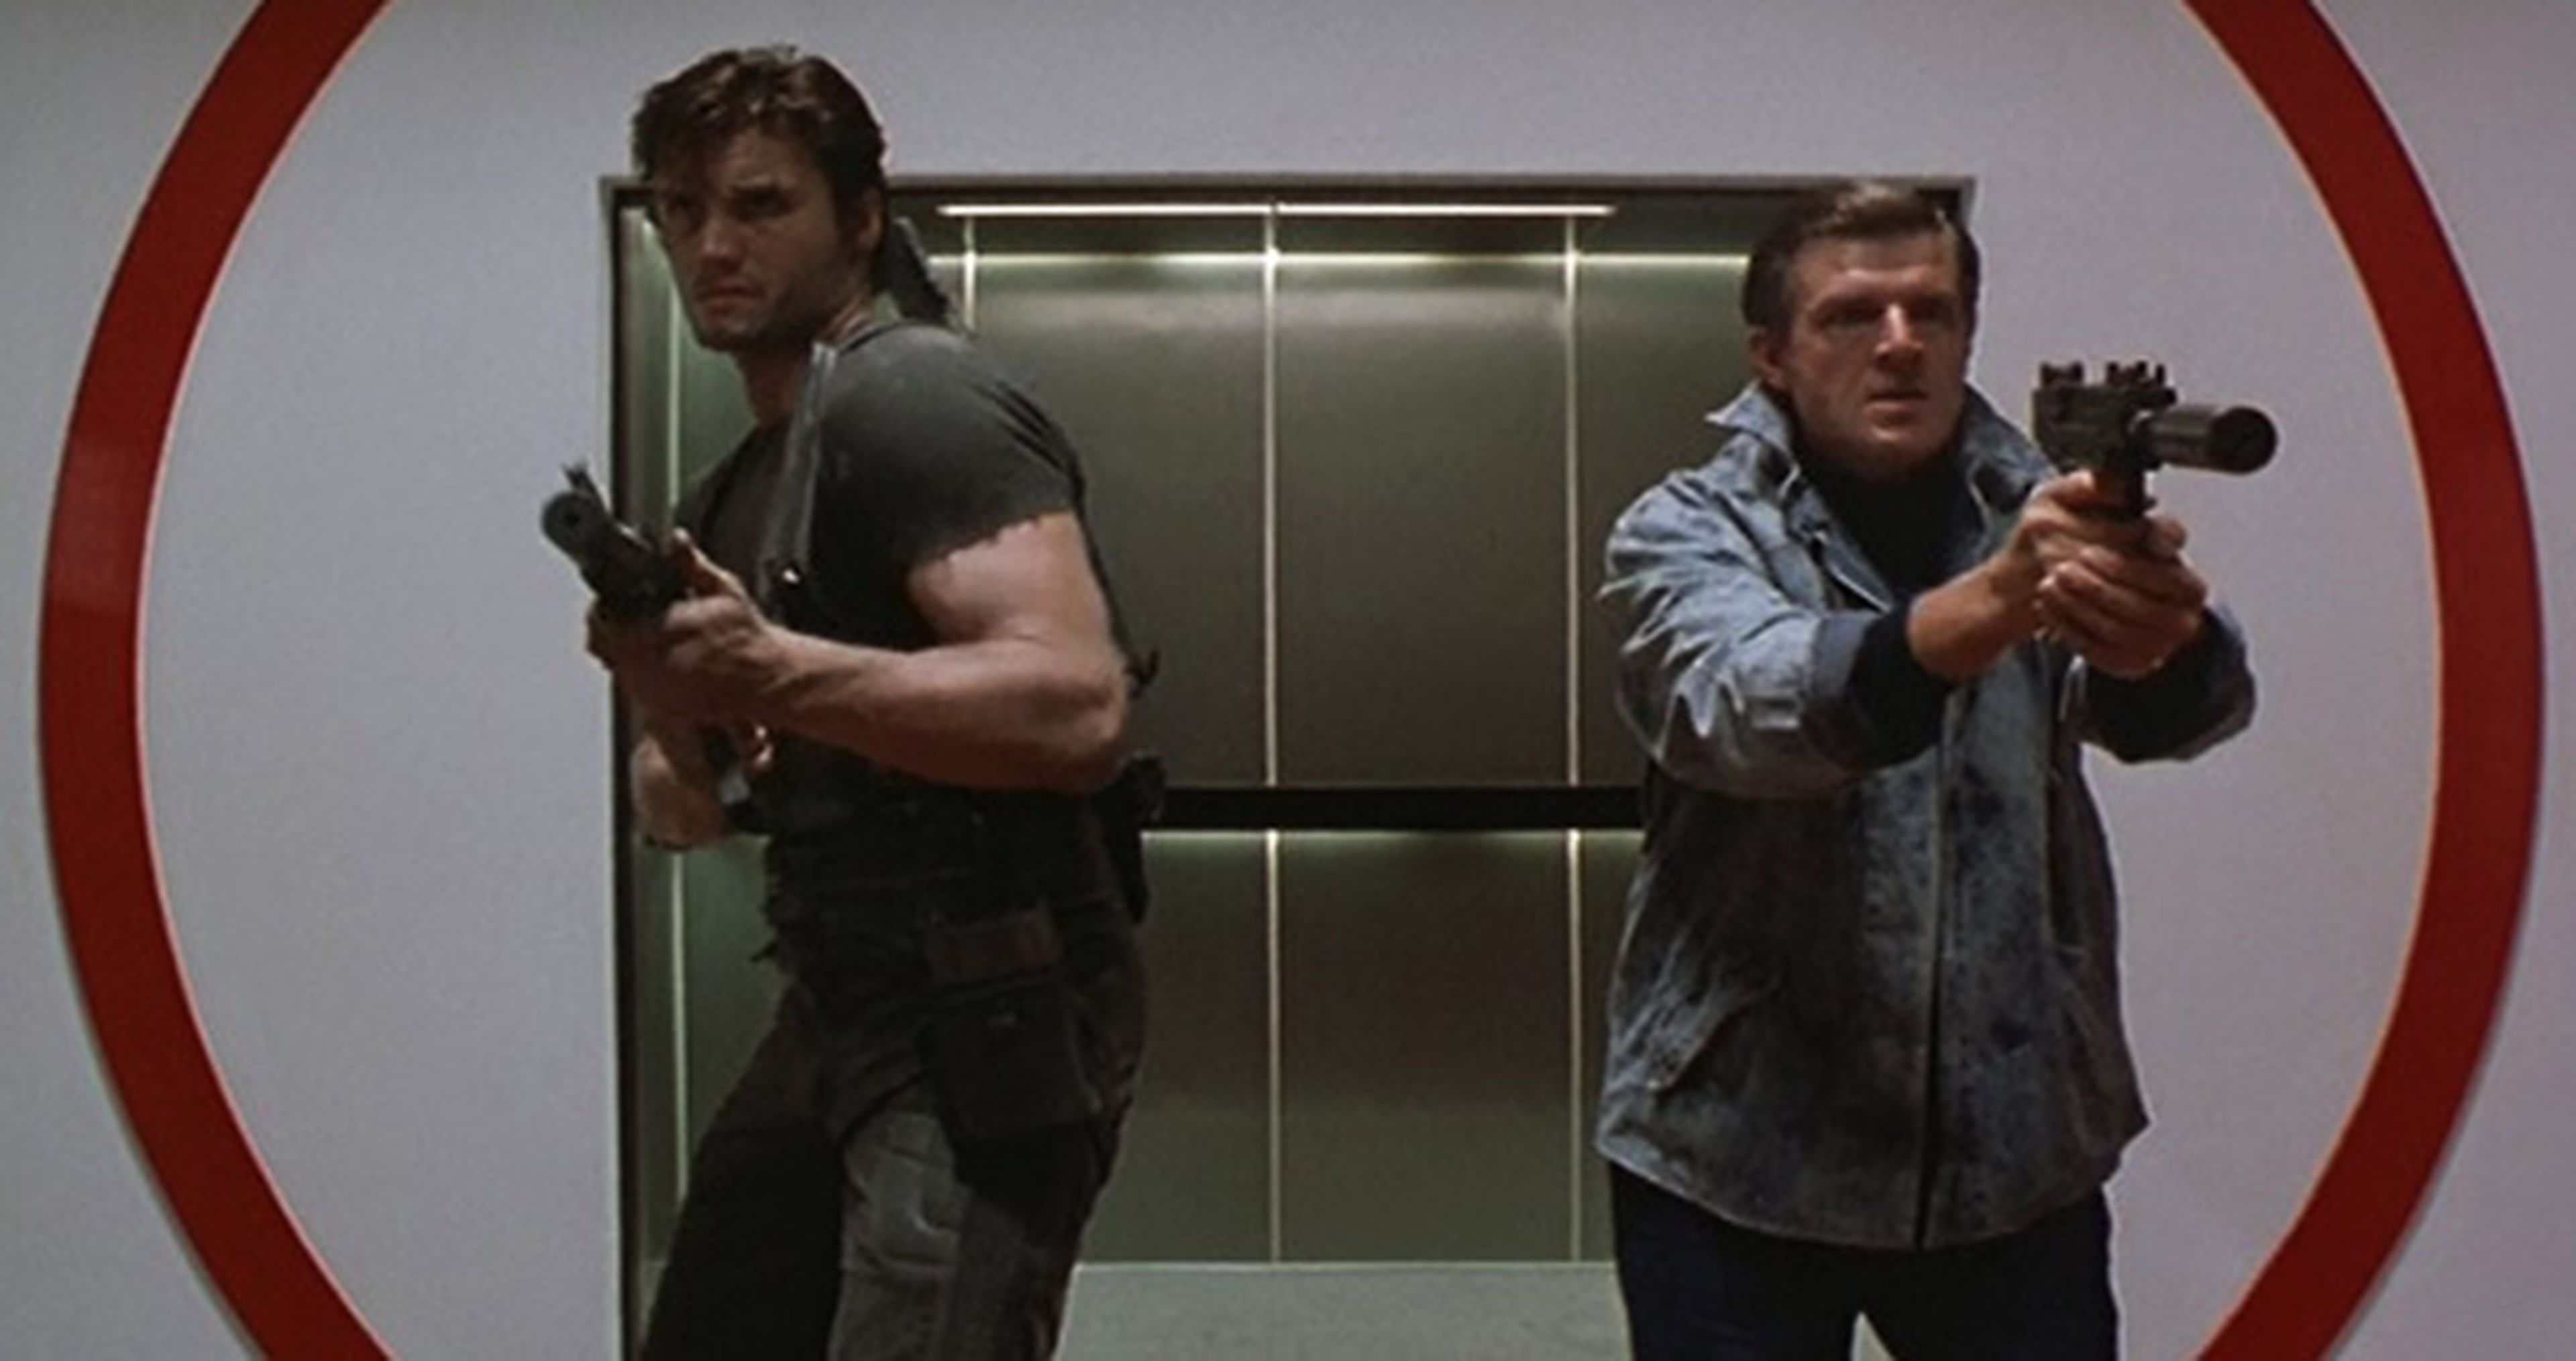 Vengador (The Punisher, 1989) - Crítica de la película con Dolph Lundgren